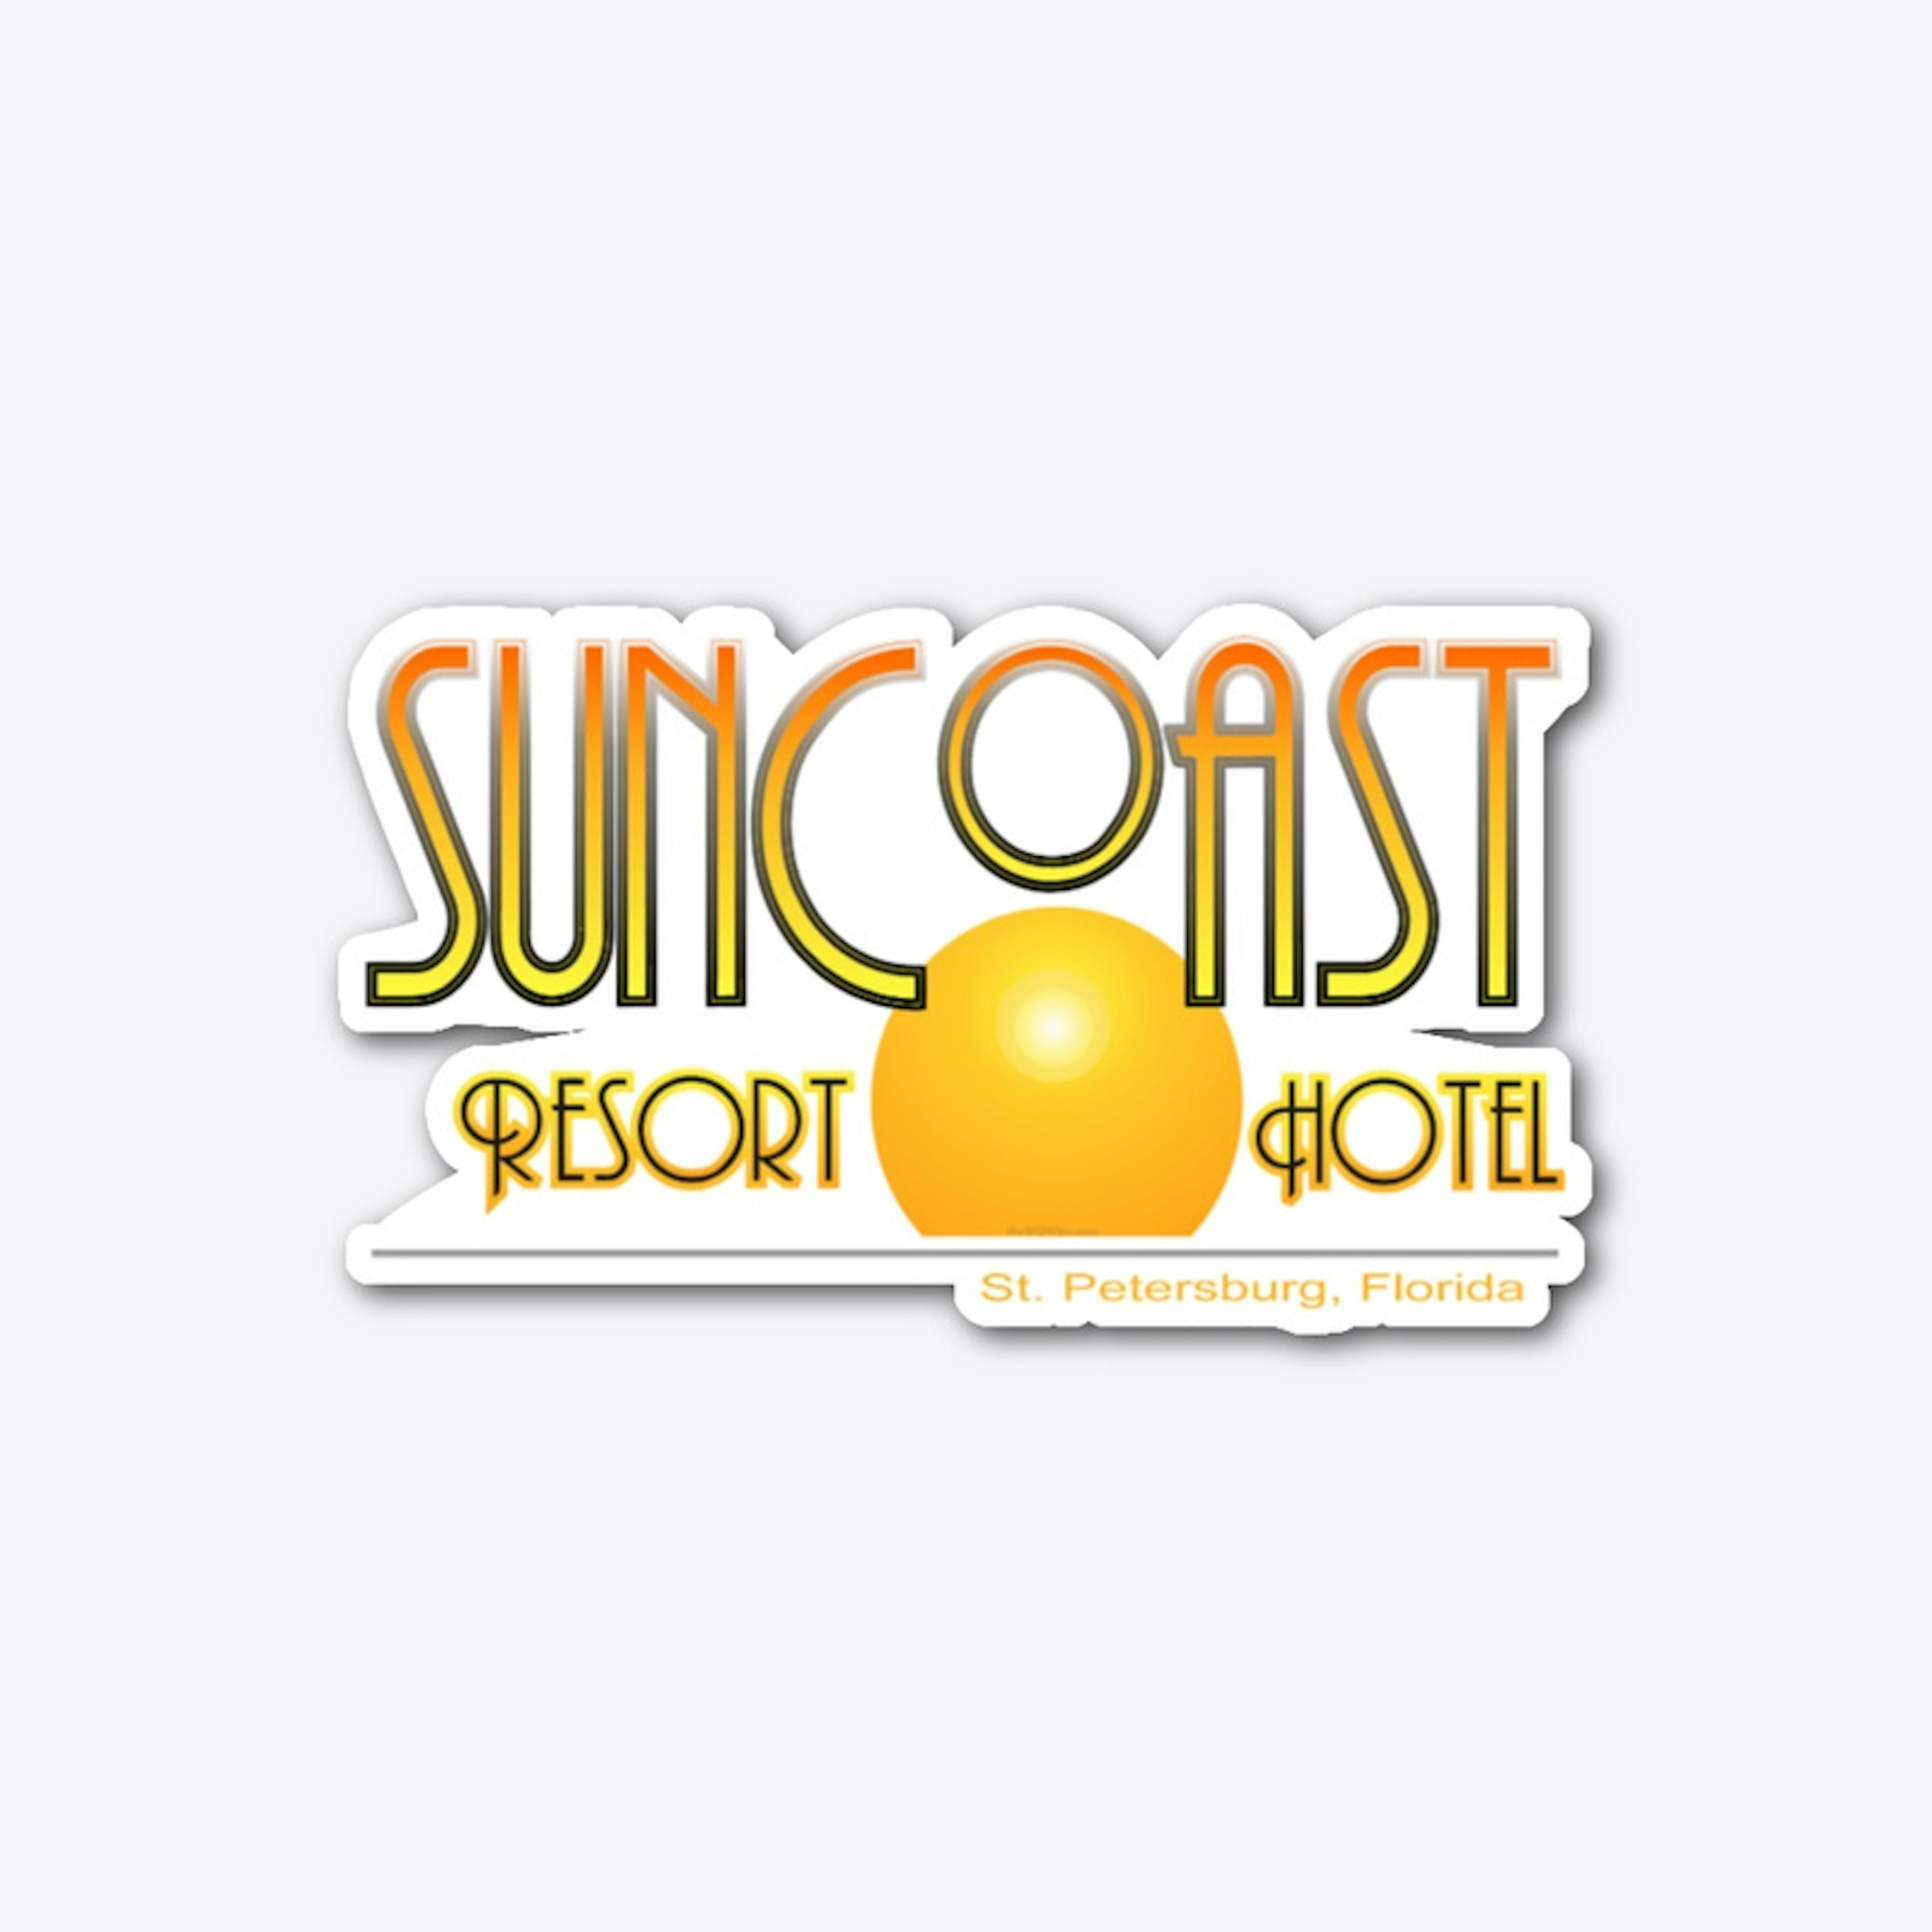 SuncoastResort